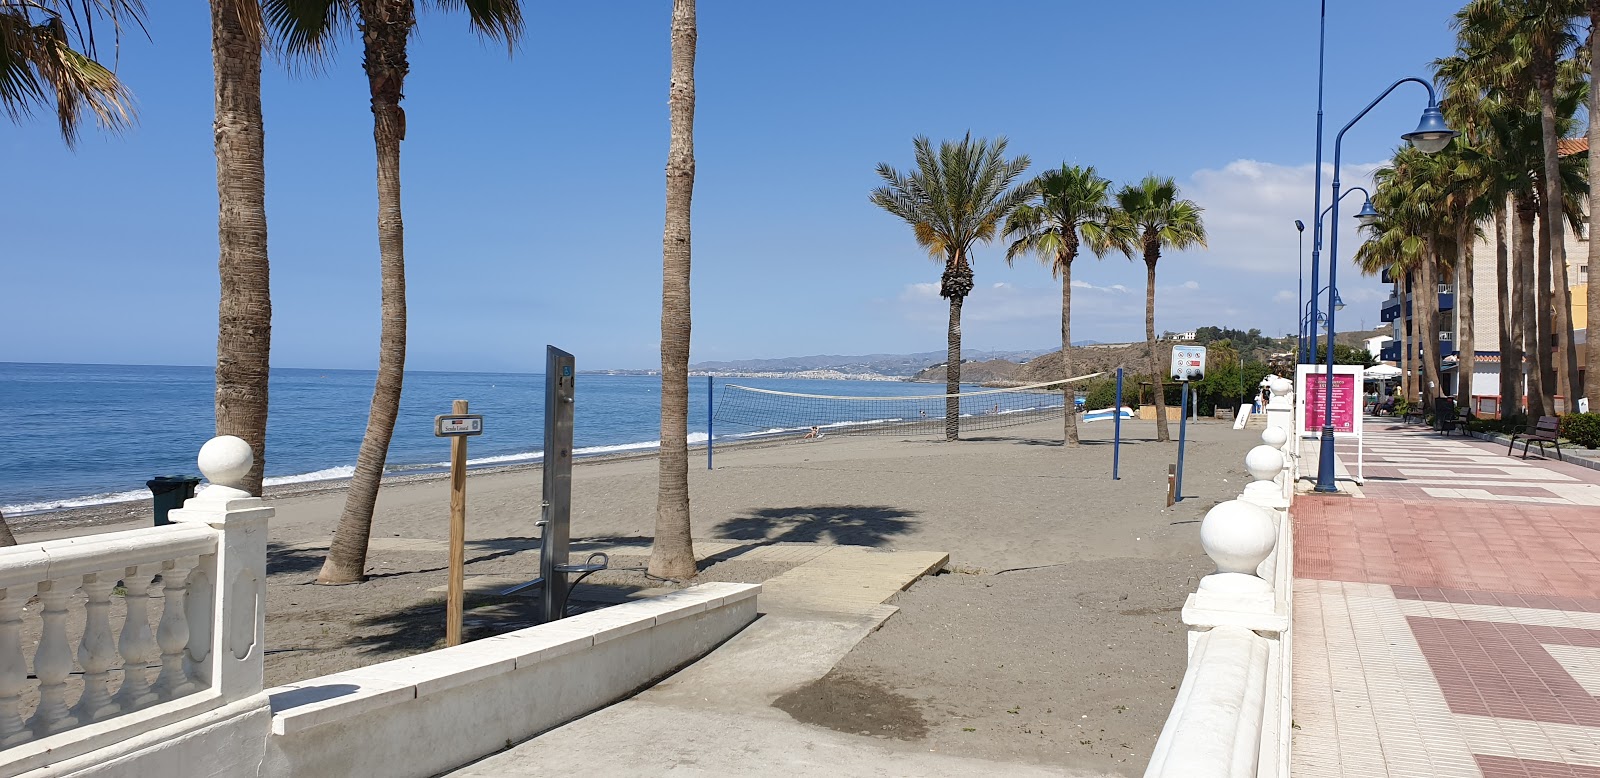 Photo of Playa de el Morche and the settlement